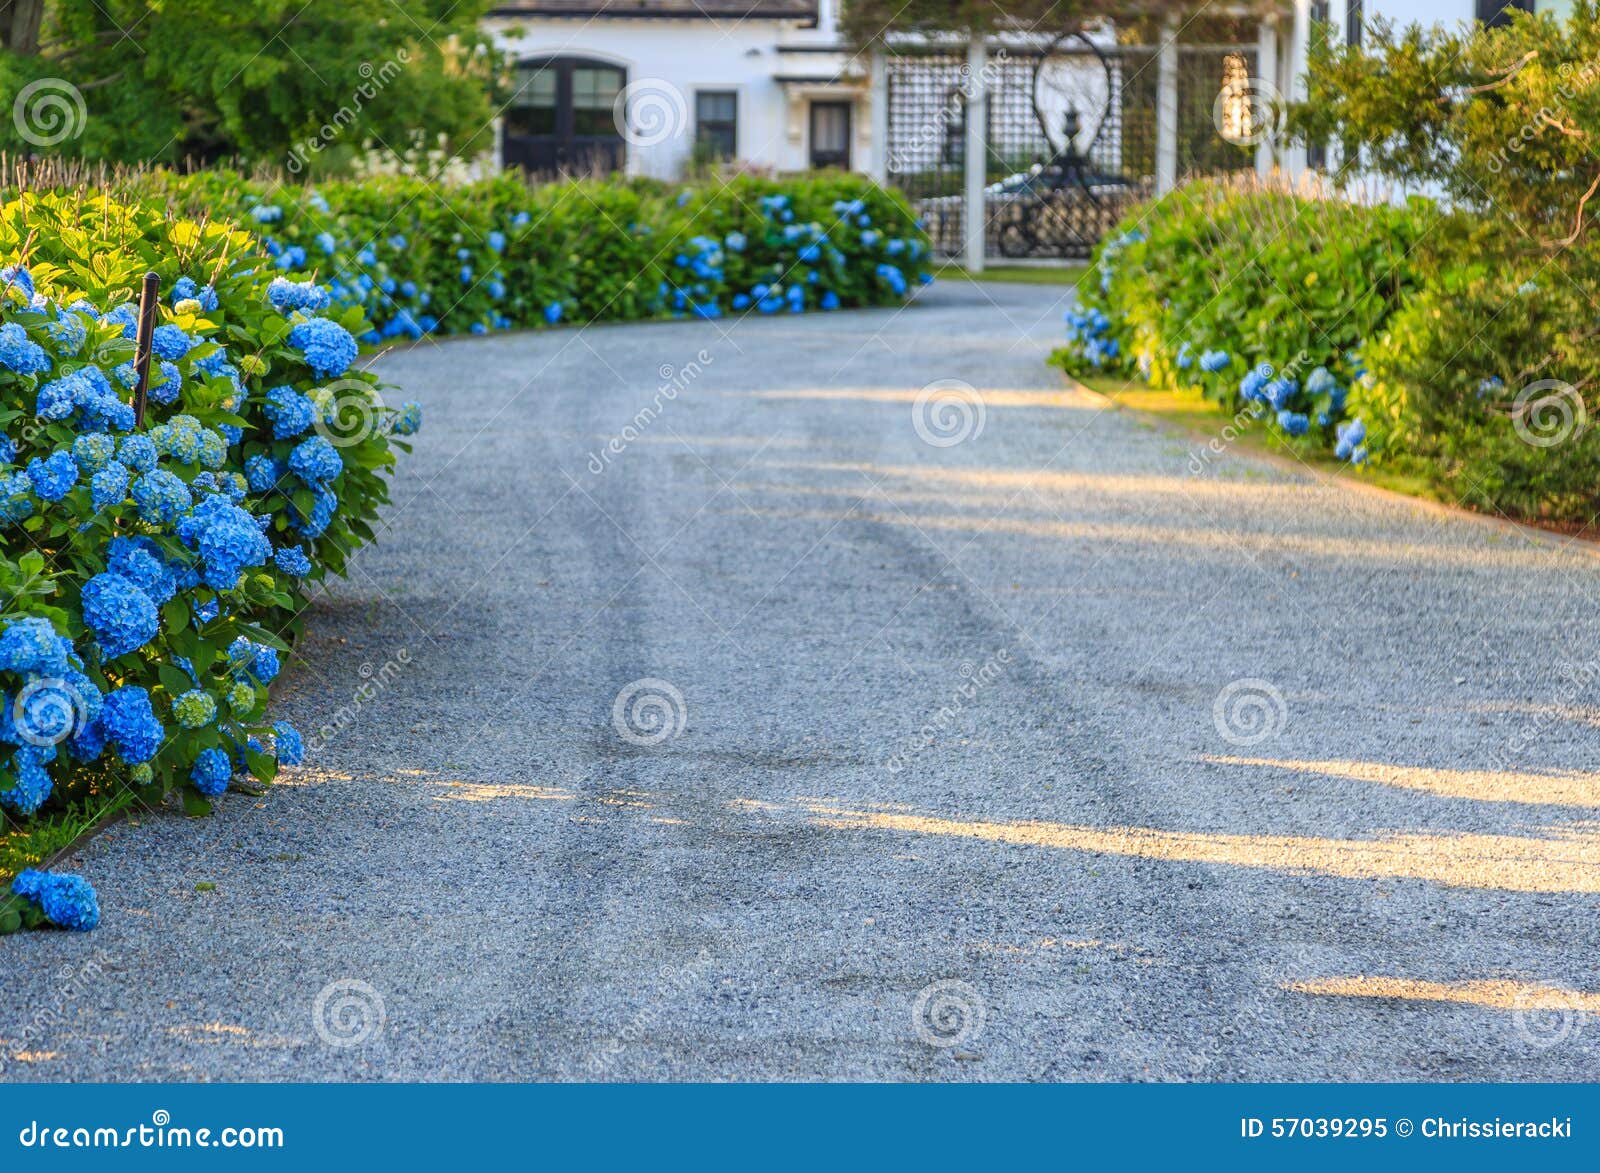 house driveway blue flowers